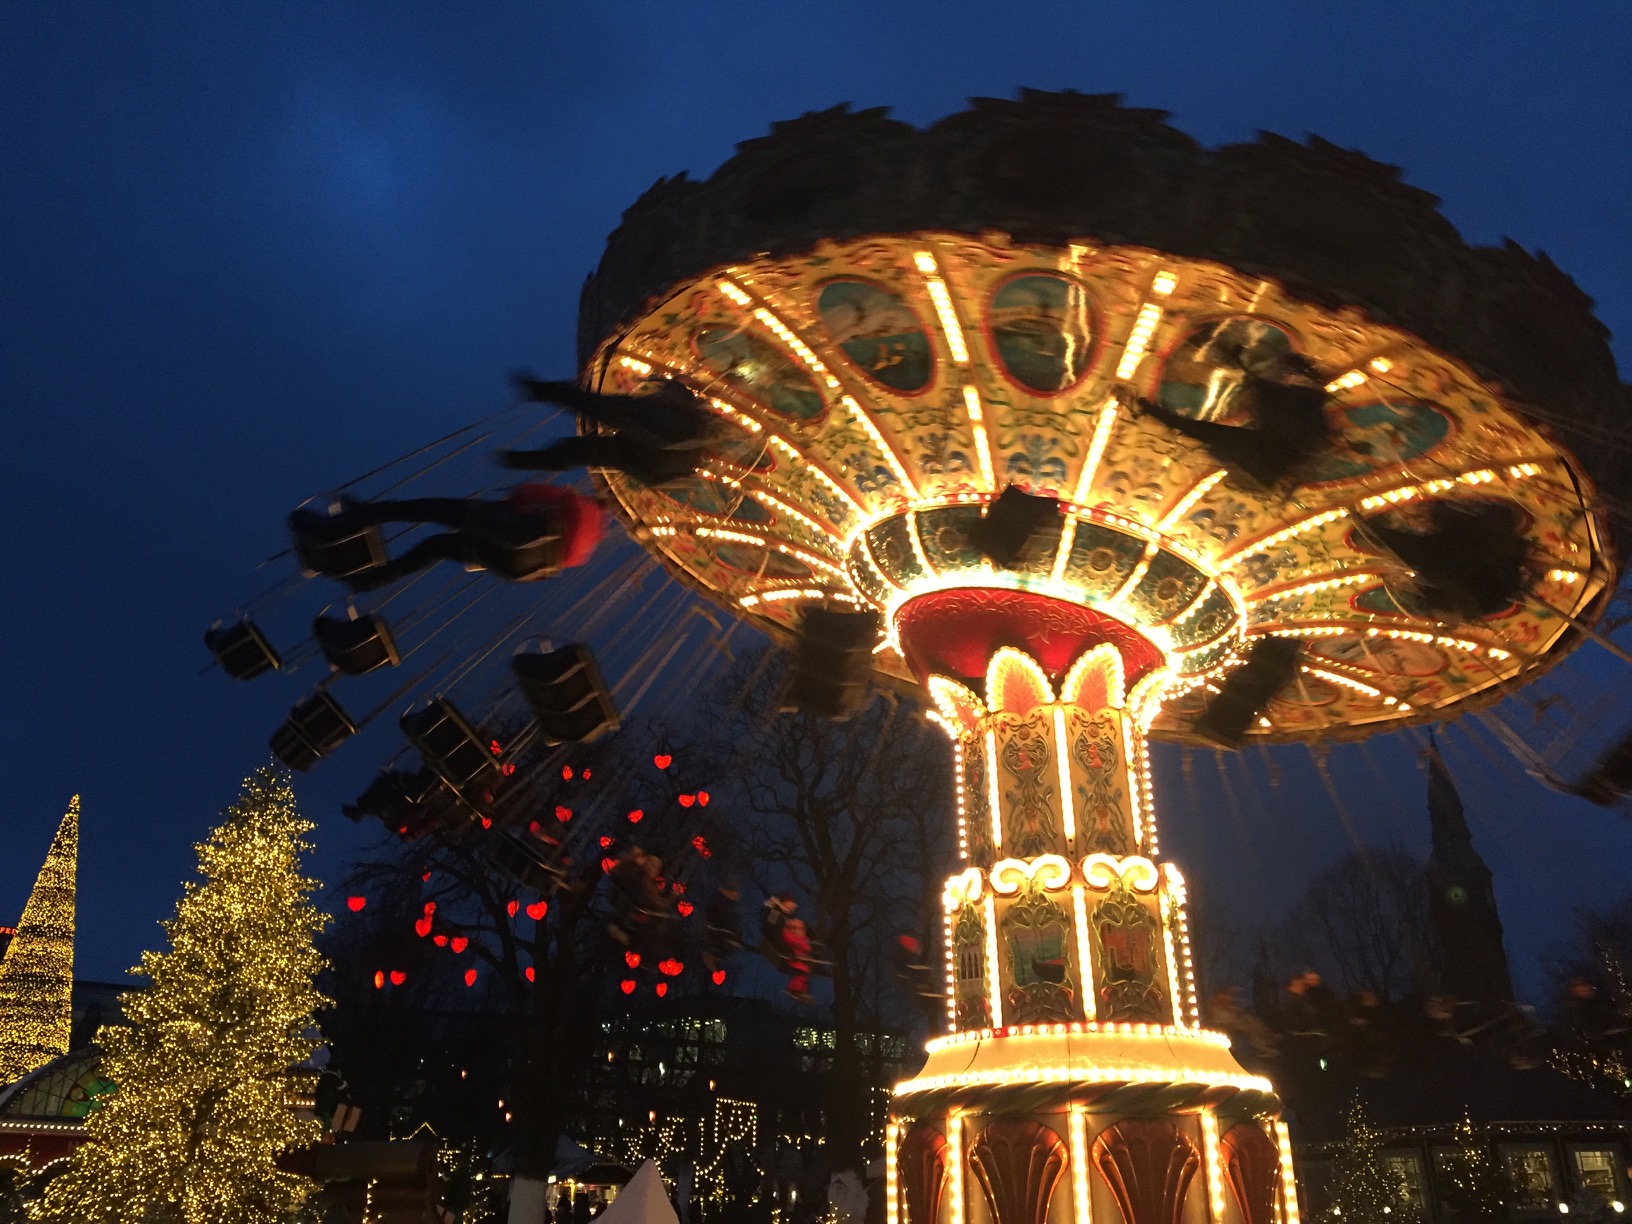 A brightly-lit swing carousel near an illuminated Christmas tree before a dark sky.